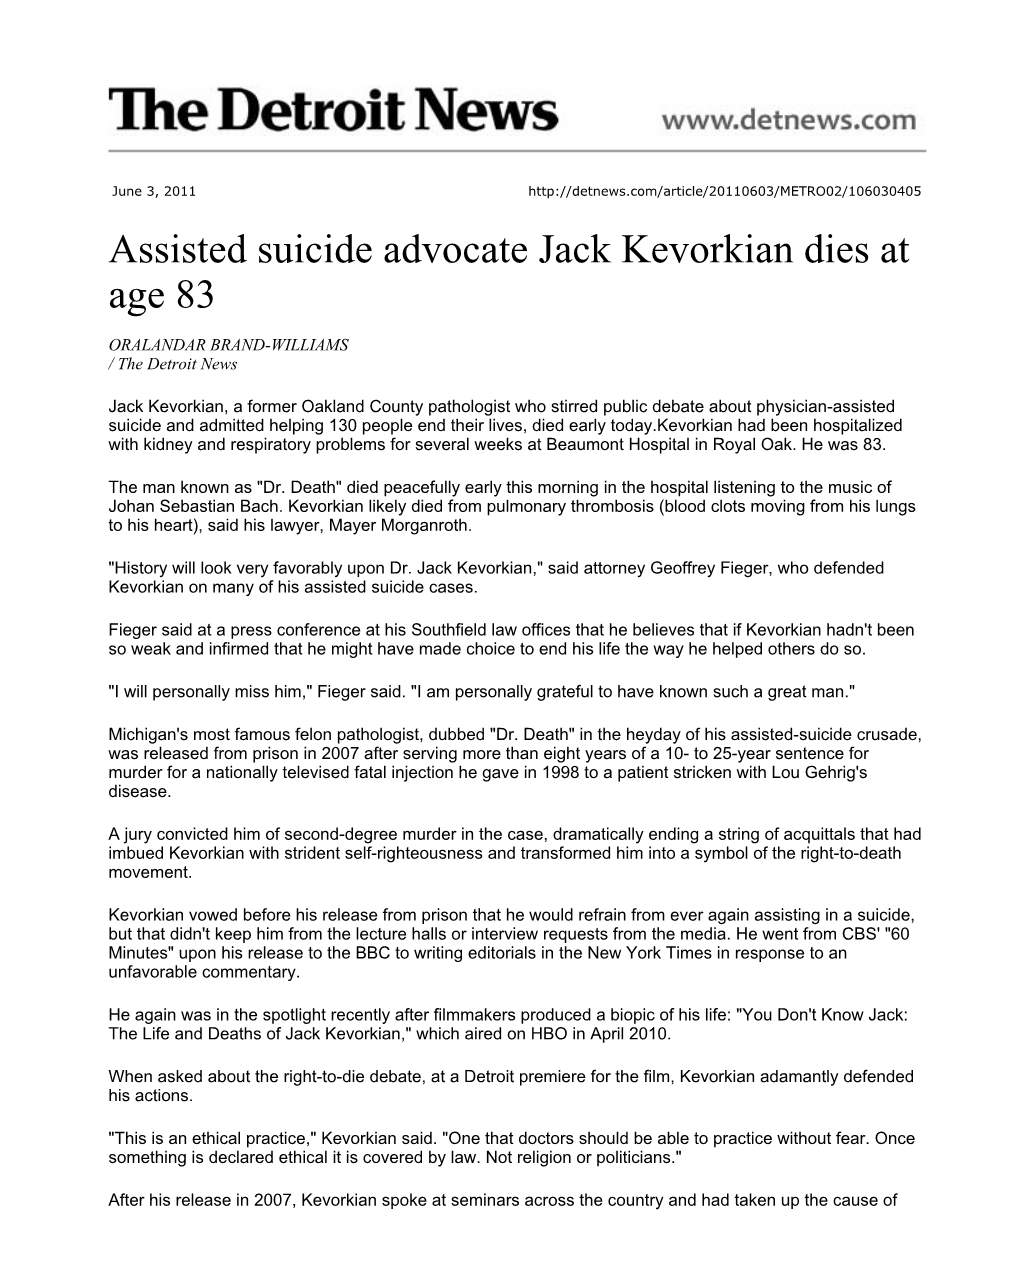 Assisted Suicide Advocate Jack Kevorkian Dies At